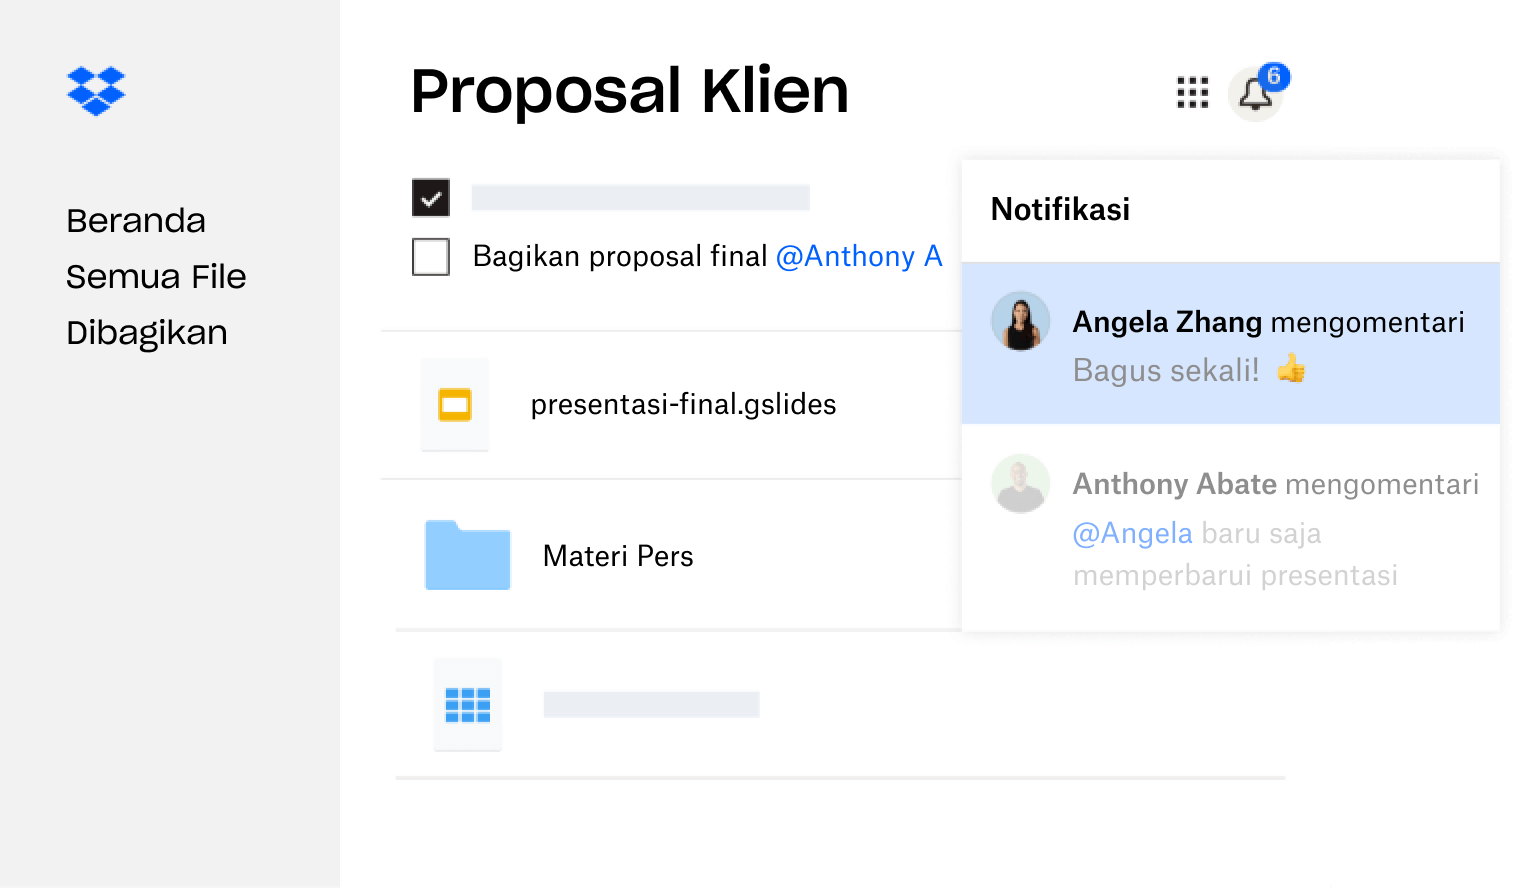 Sebuah proposal klien yang dibuat di Dropbox dibagikan kepada banyak pengguna yang memberikan umpan balik